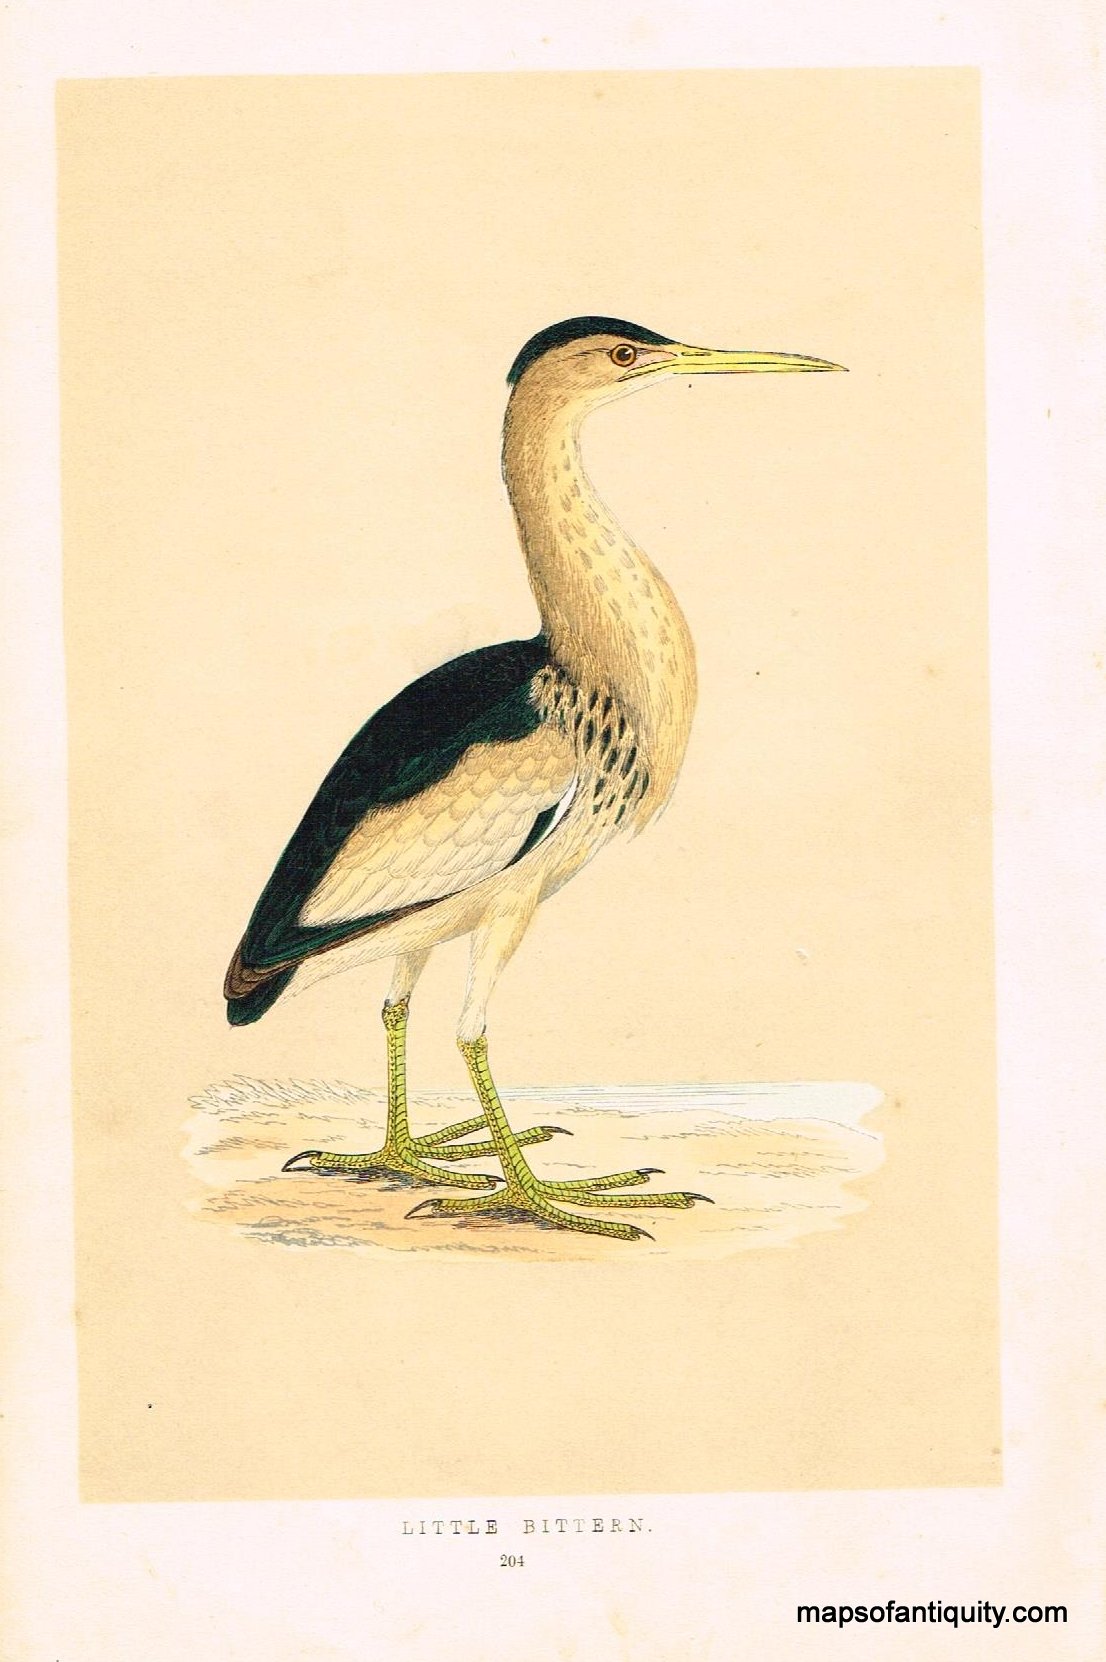 Antique-Hand-Colored-Engraved-Illustration-Little-Bittern-Morris-bird-Natural-History-Birds-1851-Morris-Maps-Of-Antiquity